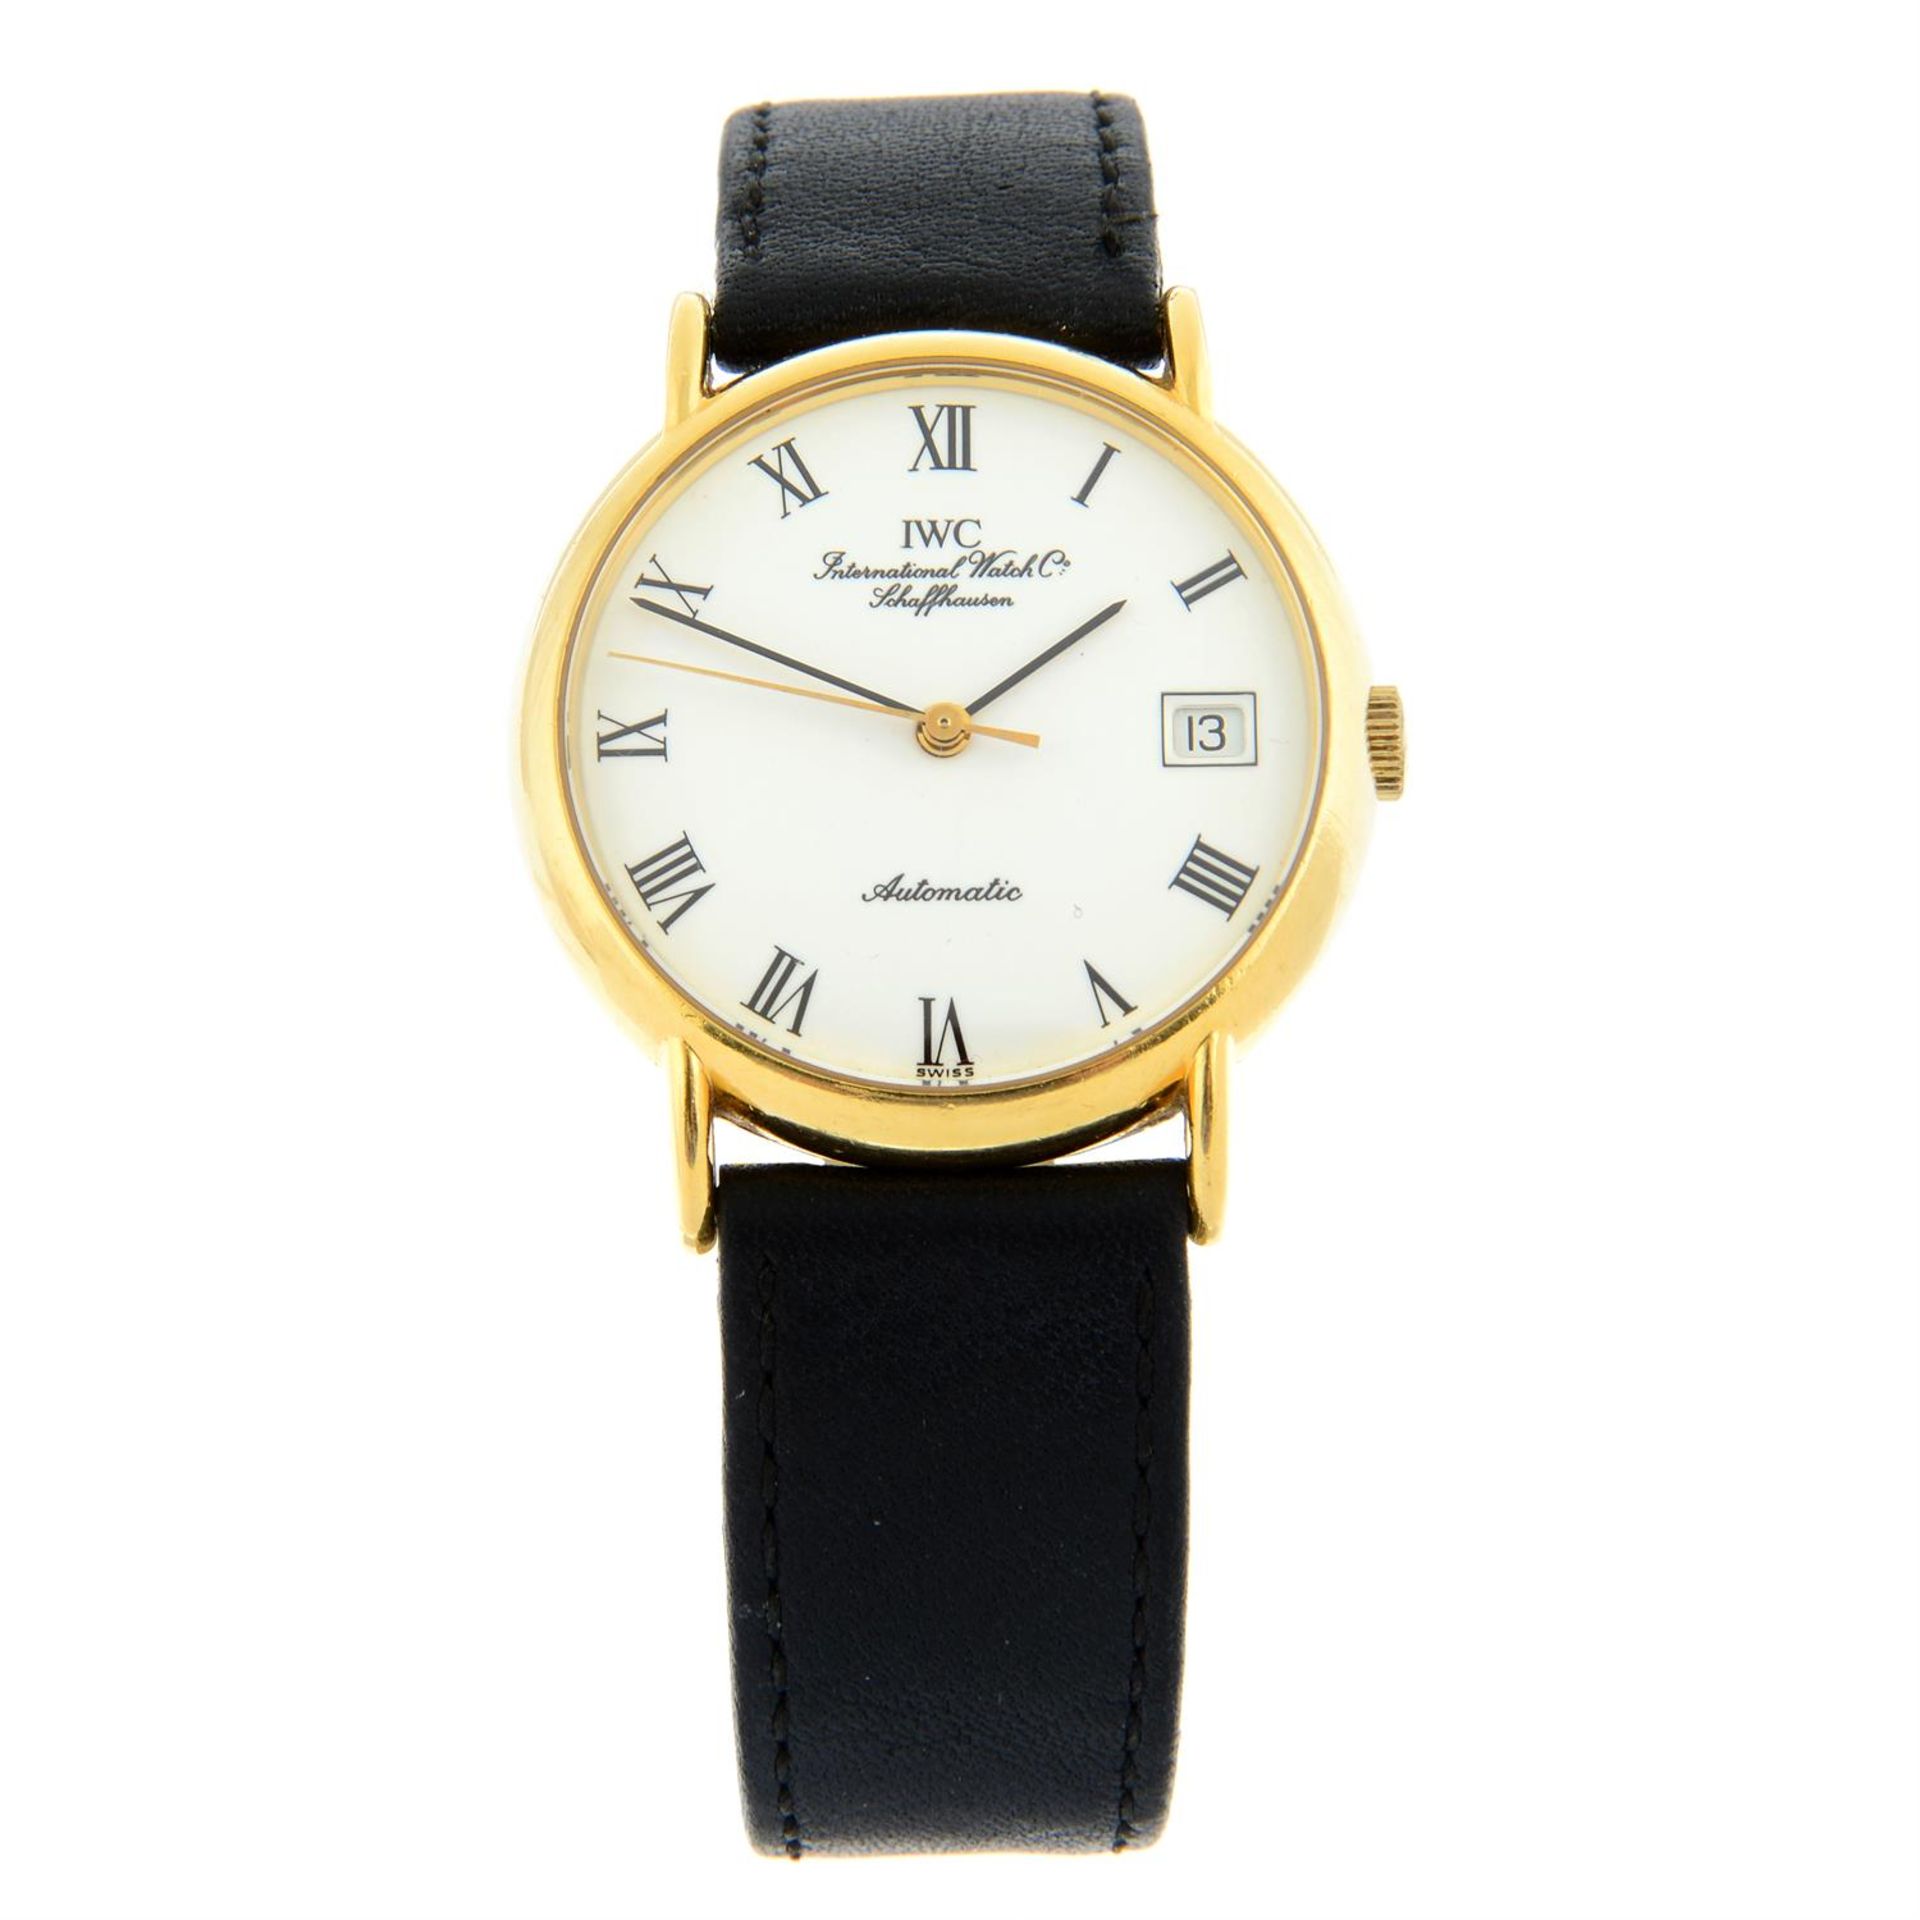 IWC - a yellow metal wrist watch, 34mm.